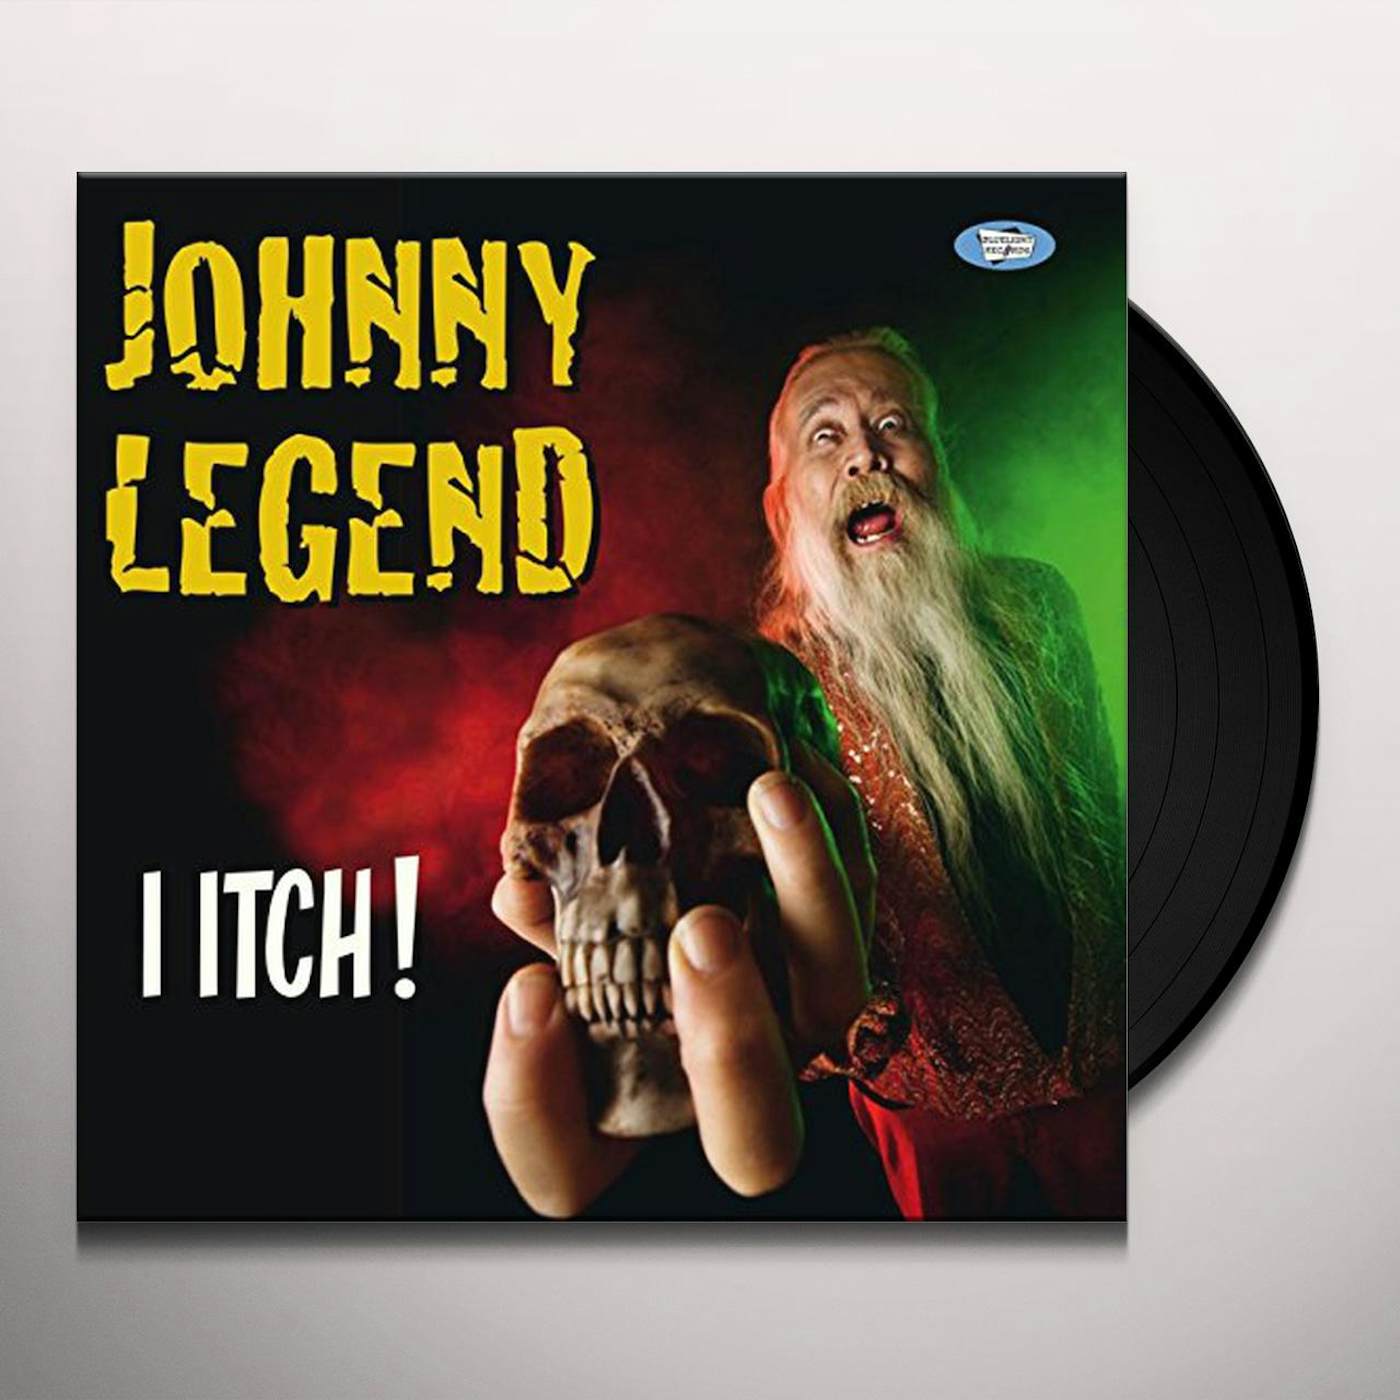 Johnny Legend I Itch Vinyl Record